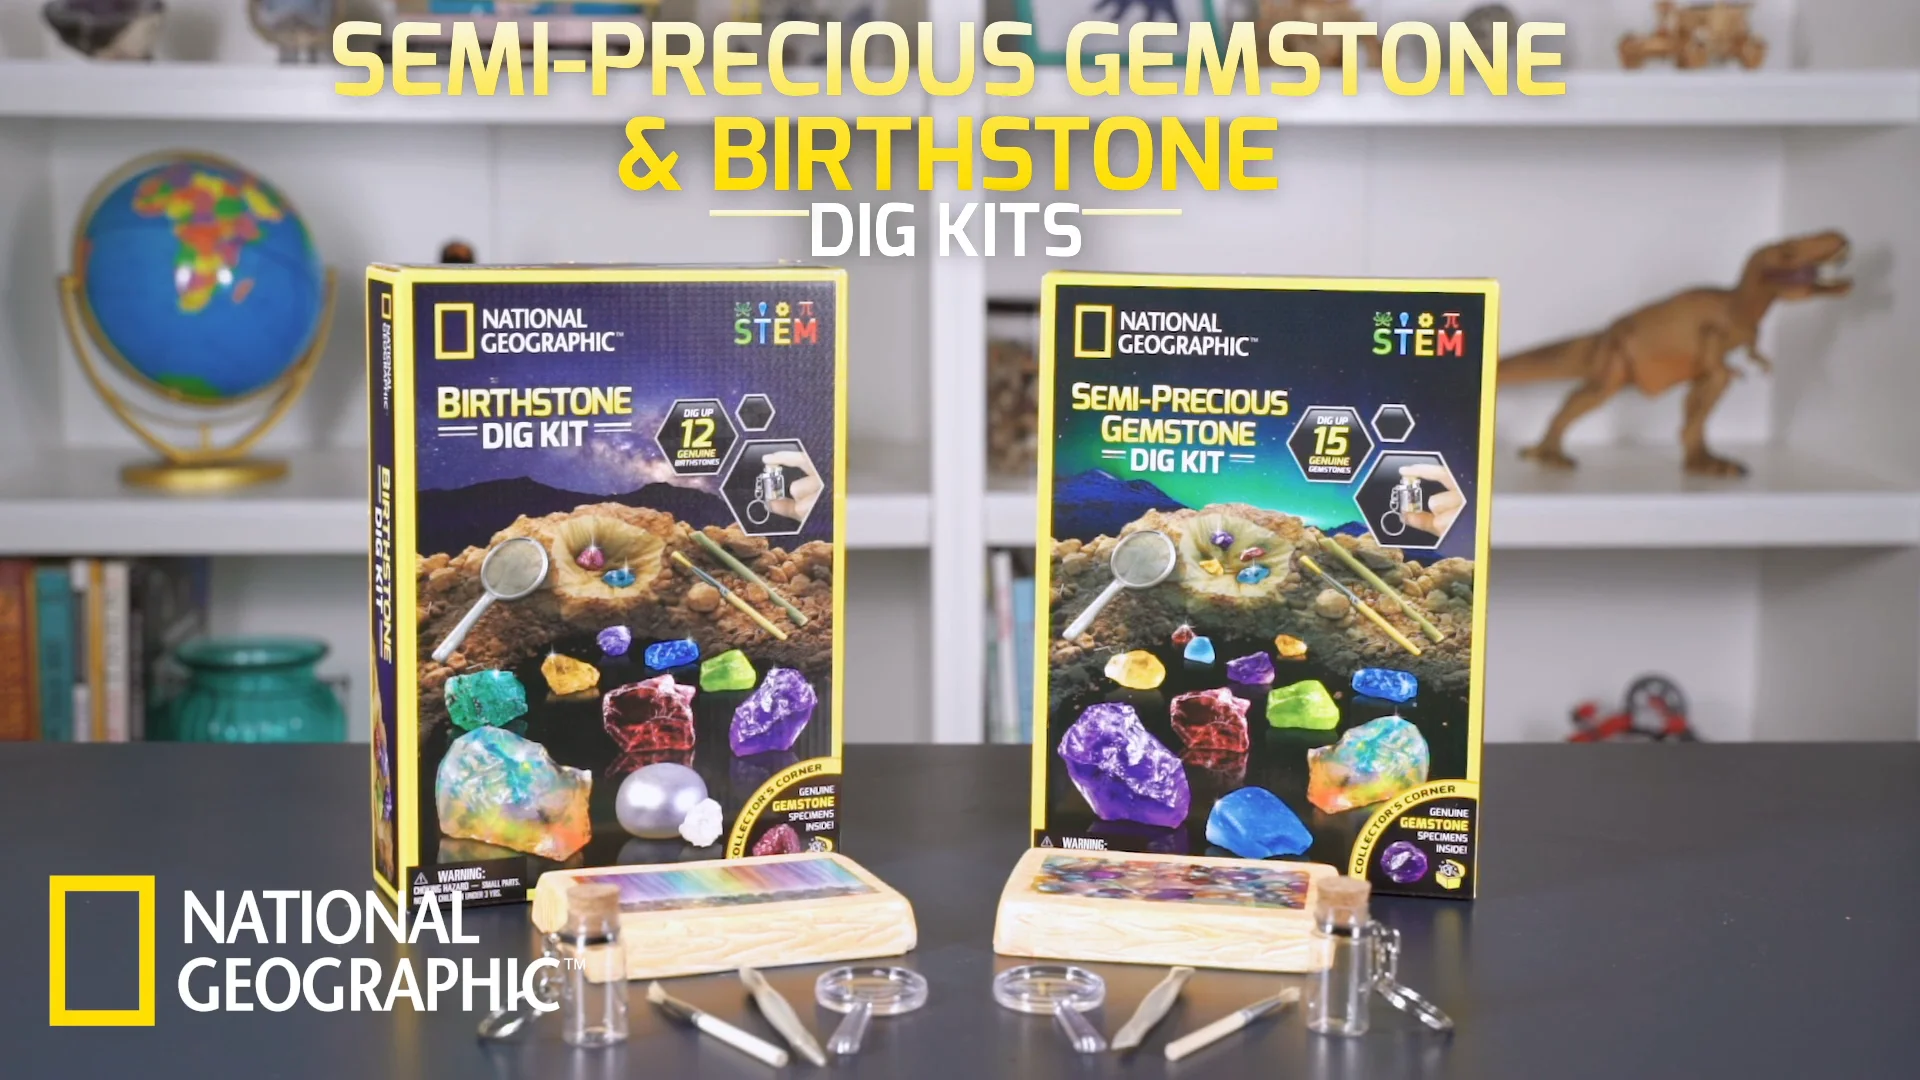 Semi-Precious Gemstone & Birthstone Dig Kits - National Geographic on Vimeo